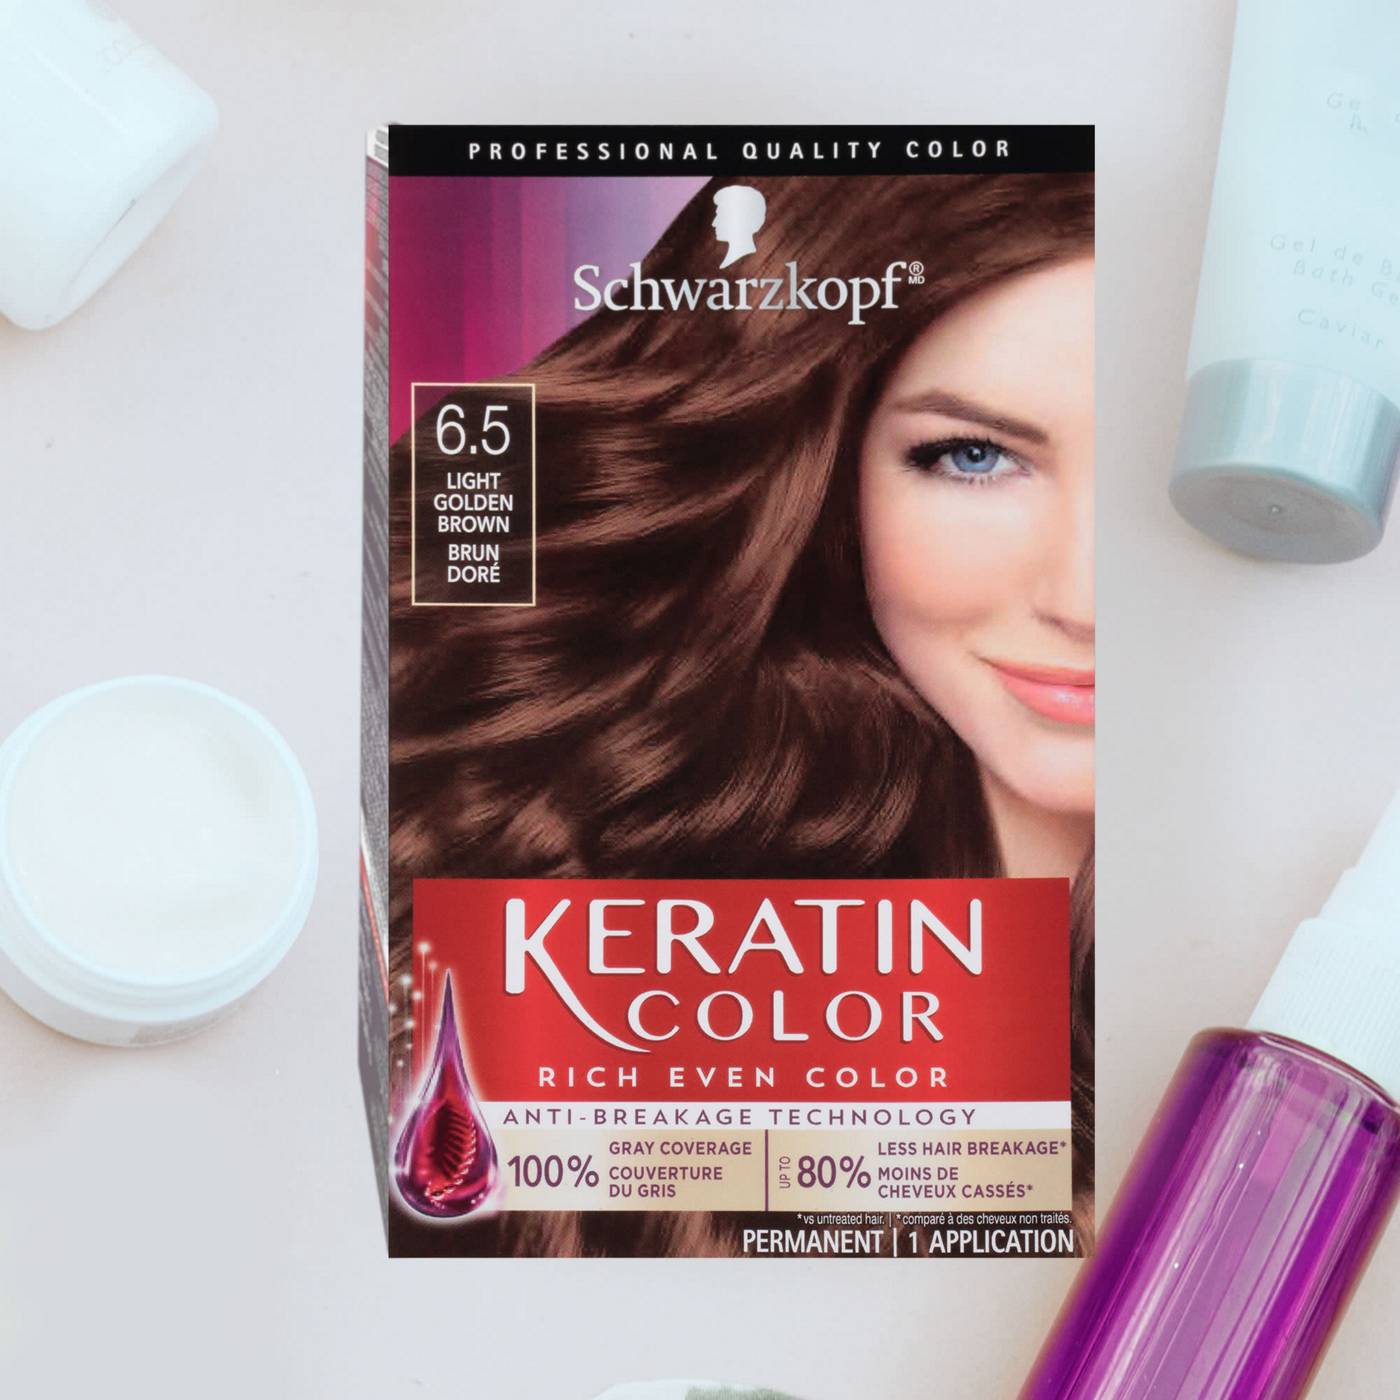 Schwarzkopf Keratin Color Permanent Hair Color Cream, 6.5 Light Golden Brown; image 5 of 5